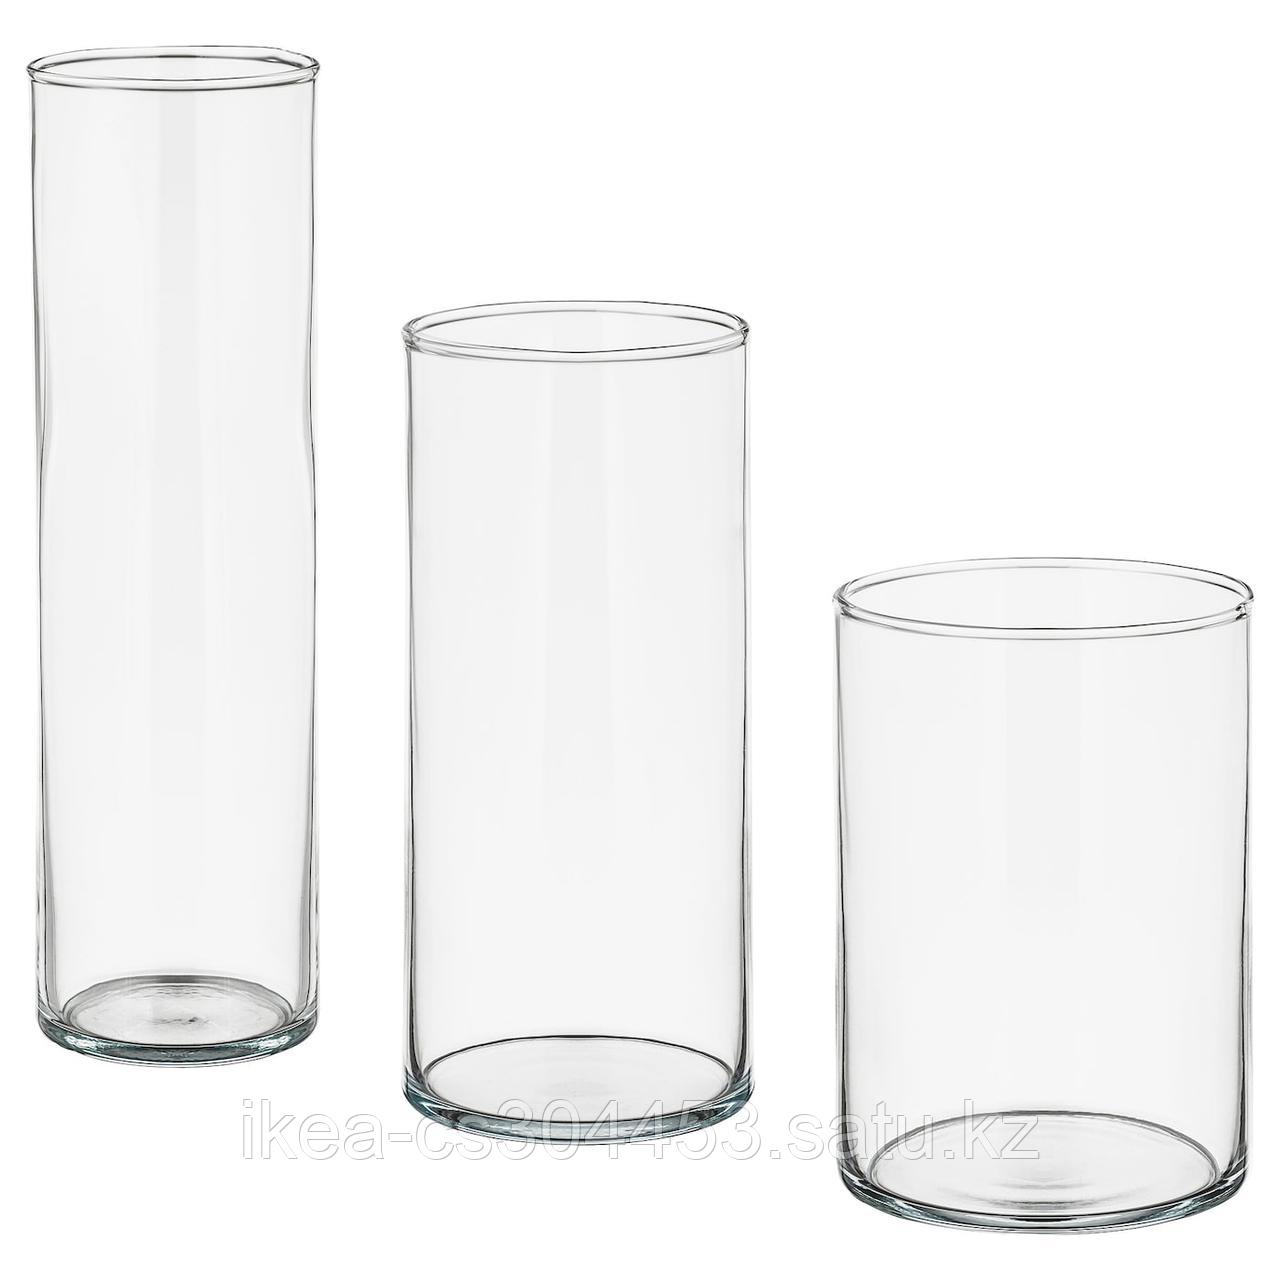 CYLINDER ЦИЛИНДР Набор ваз,3 штуки, прозрачное стекло,